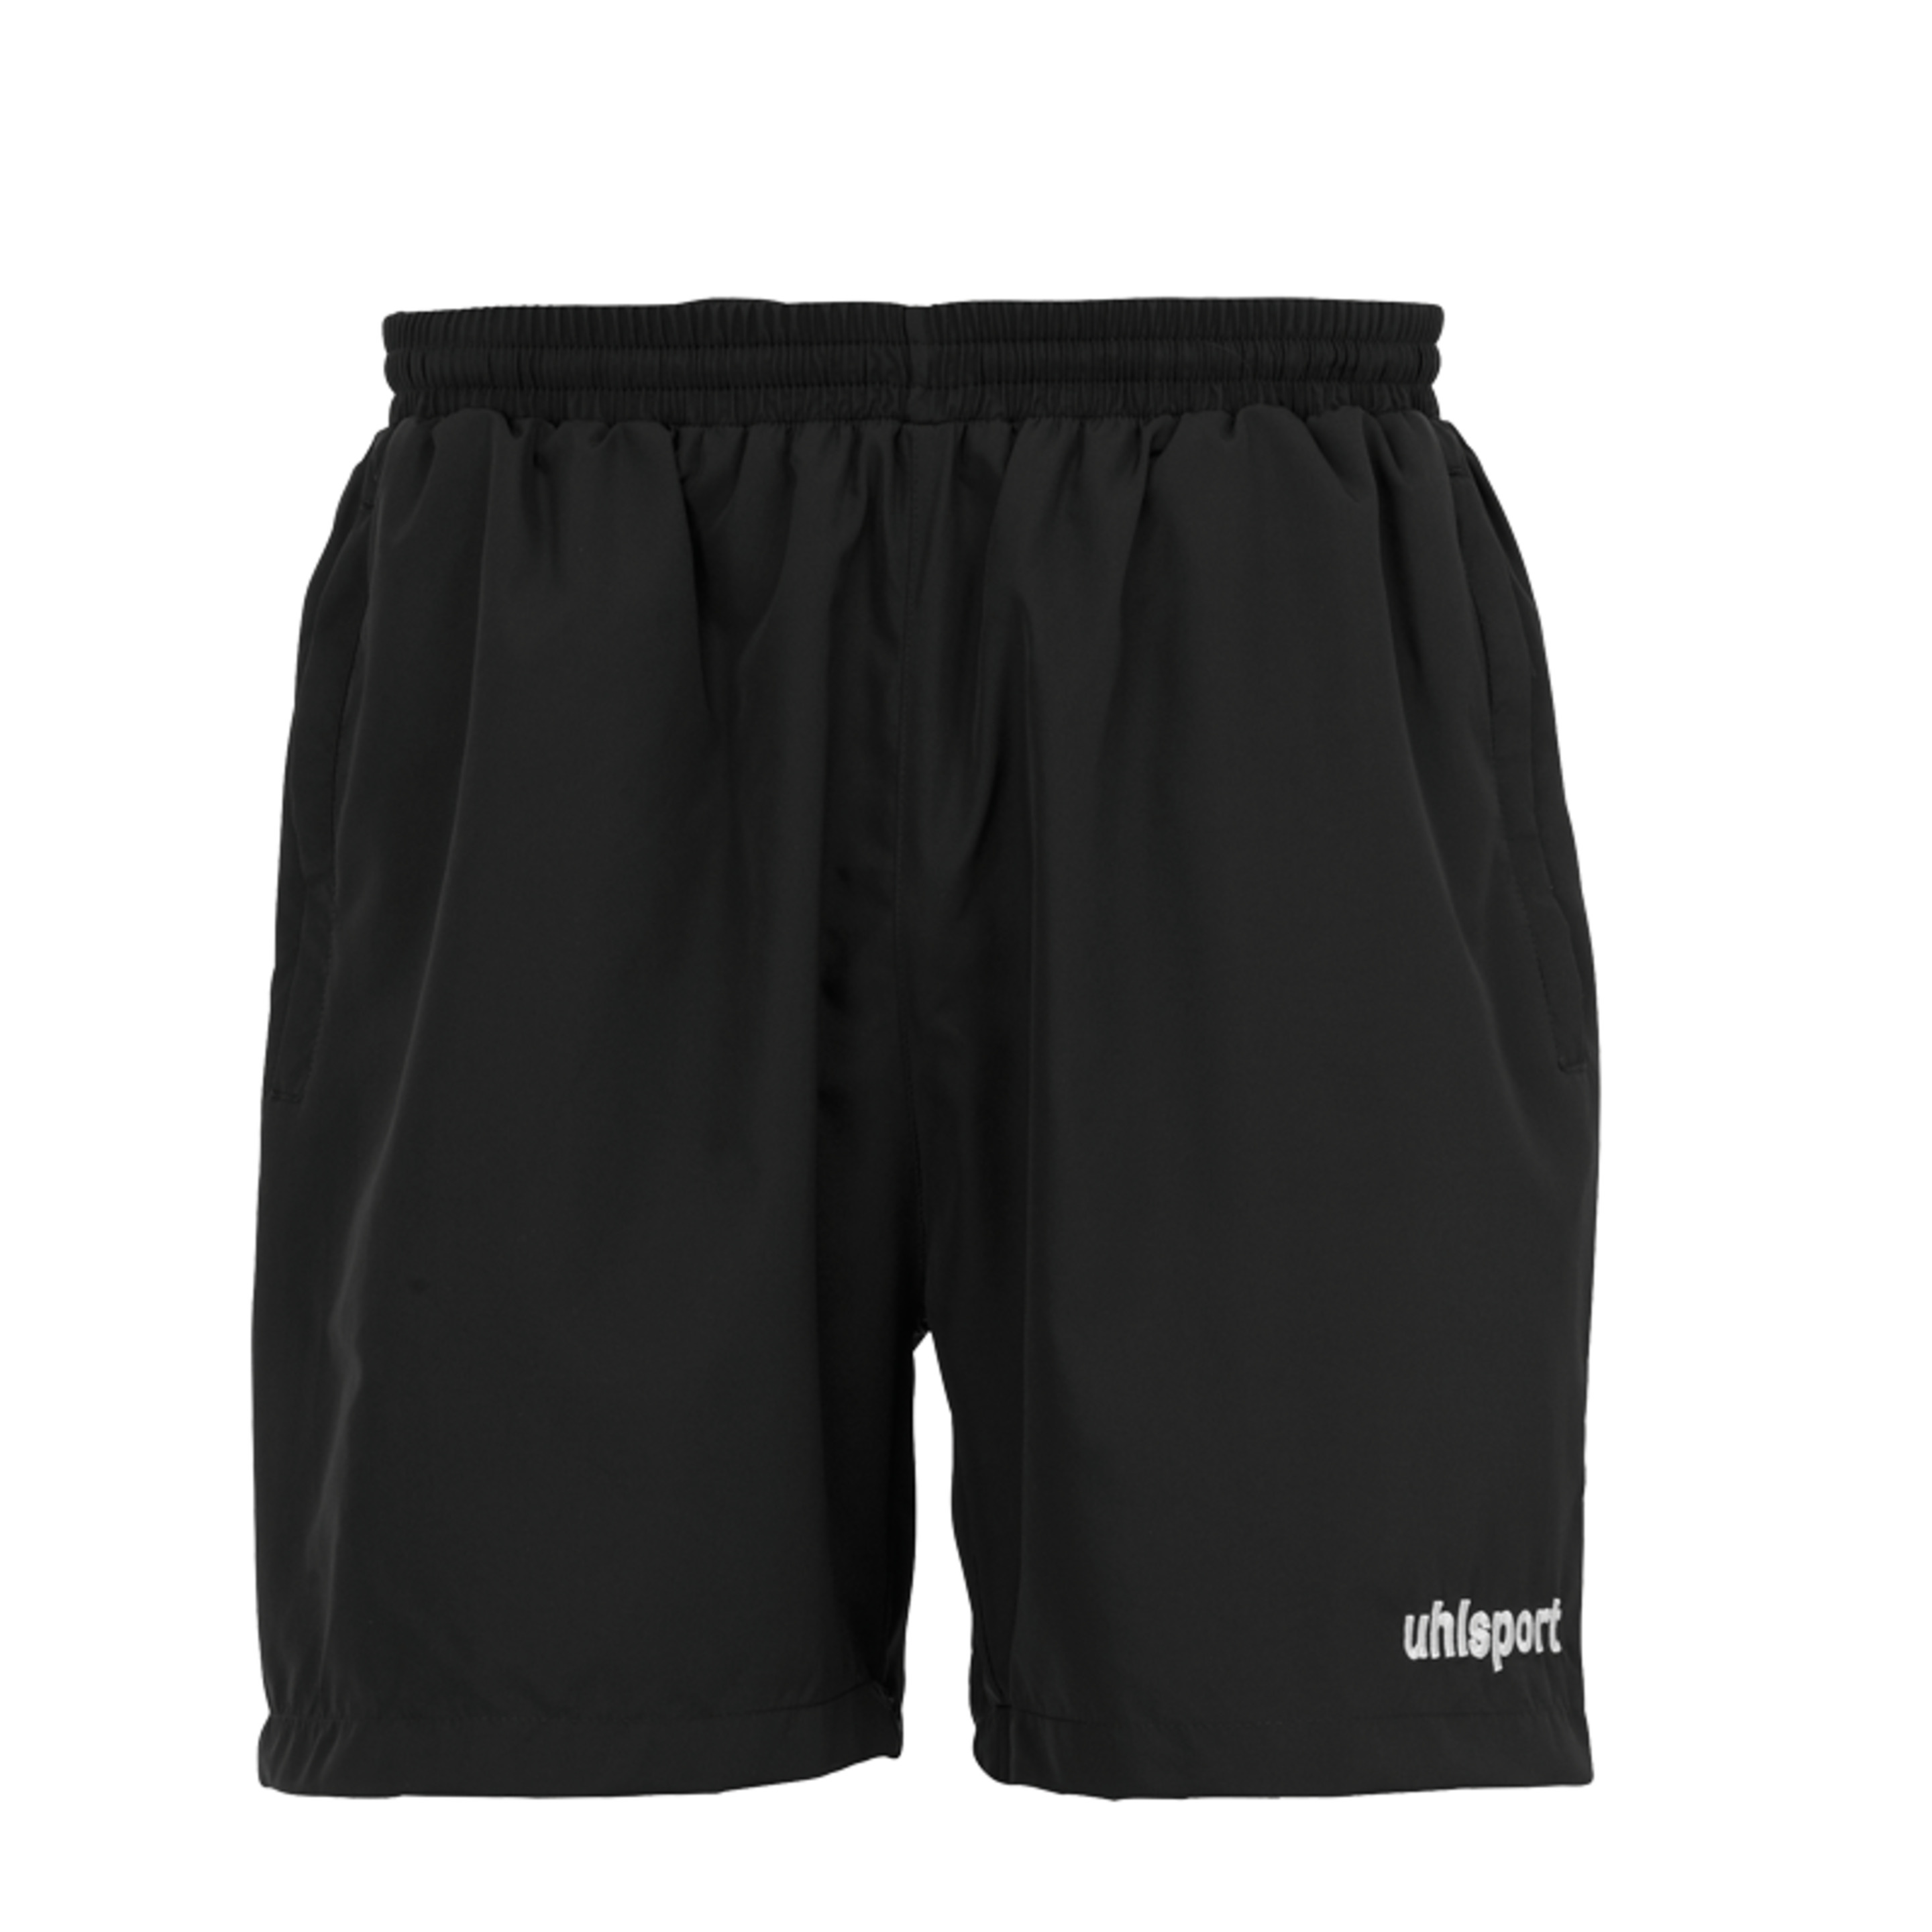 Essential Shorts Tejido Negro Uhlsport - negro - 